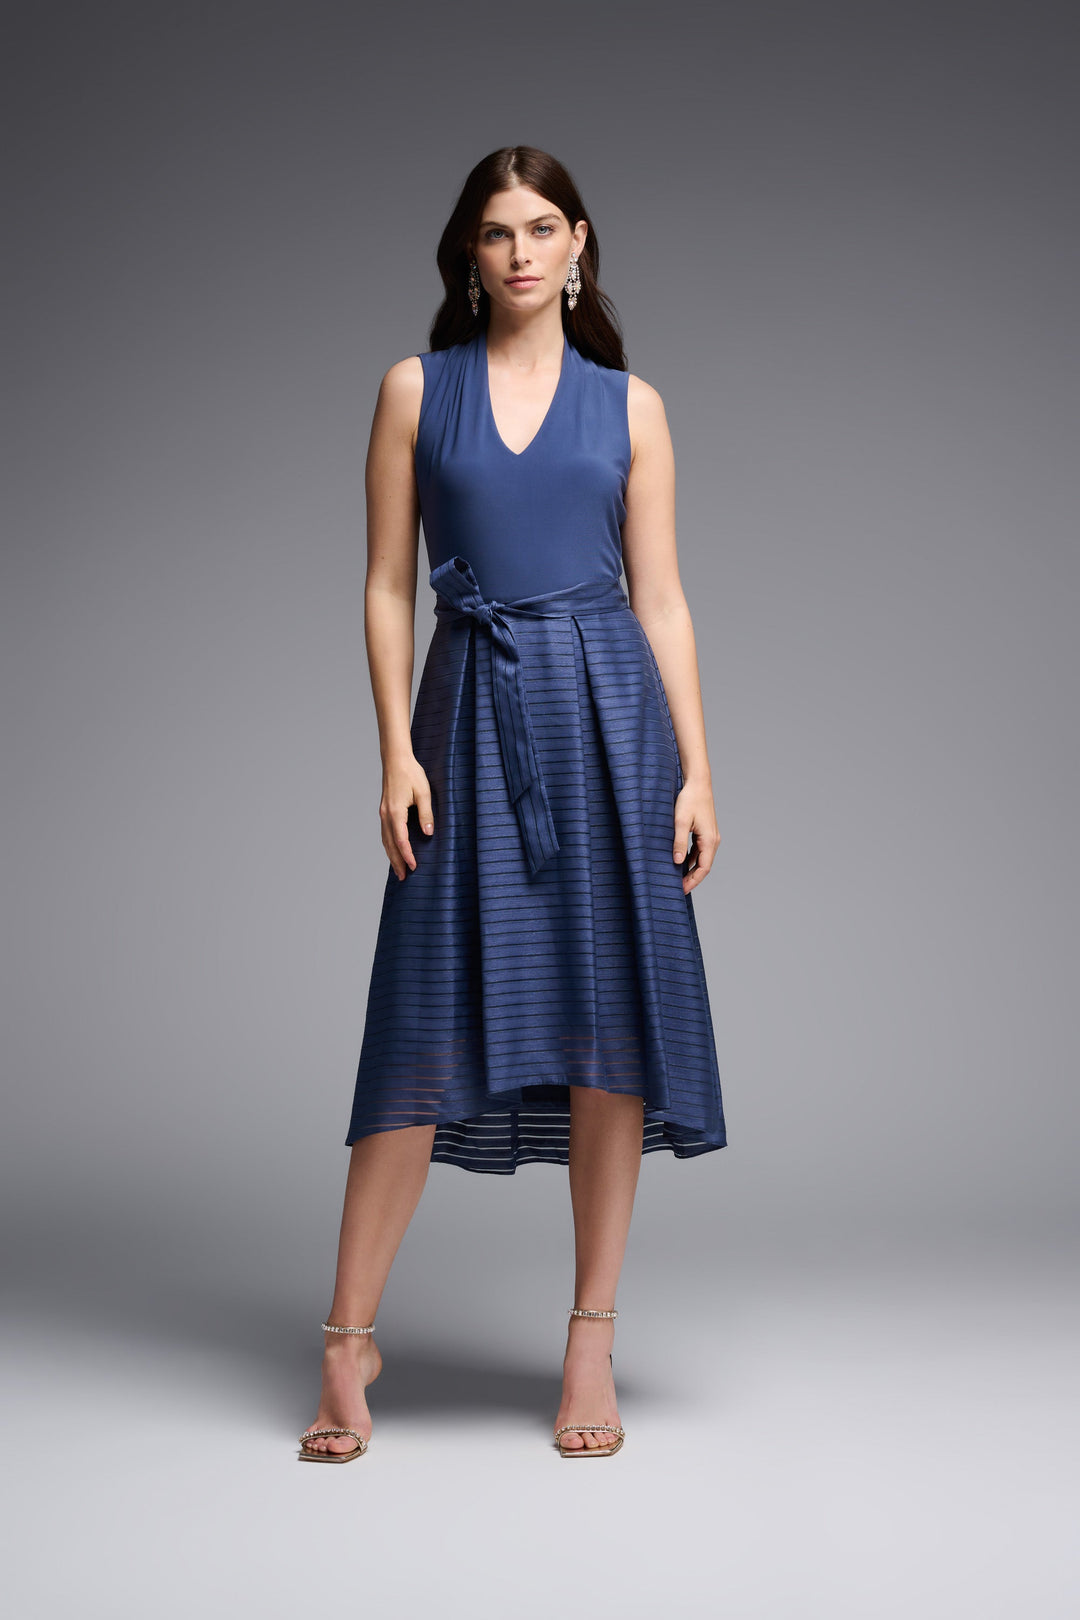 Joseph Ribkoff Dress Style 231721